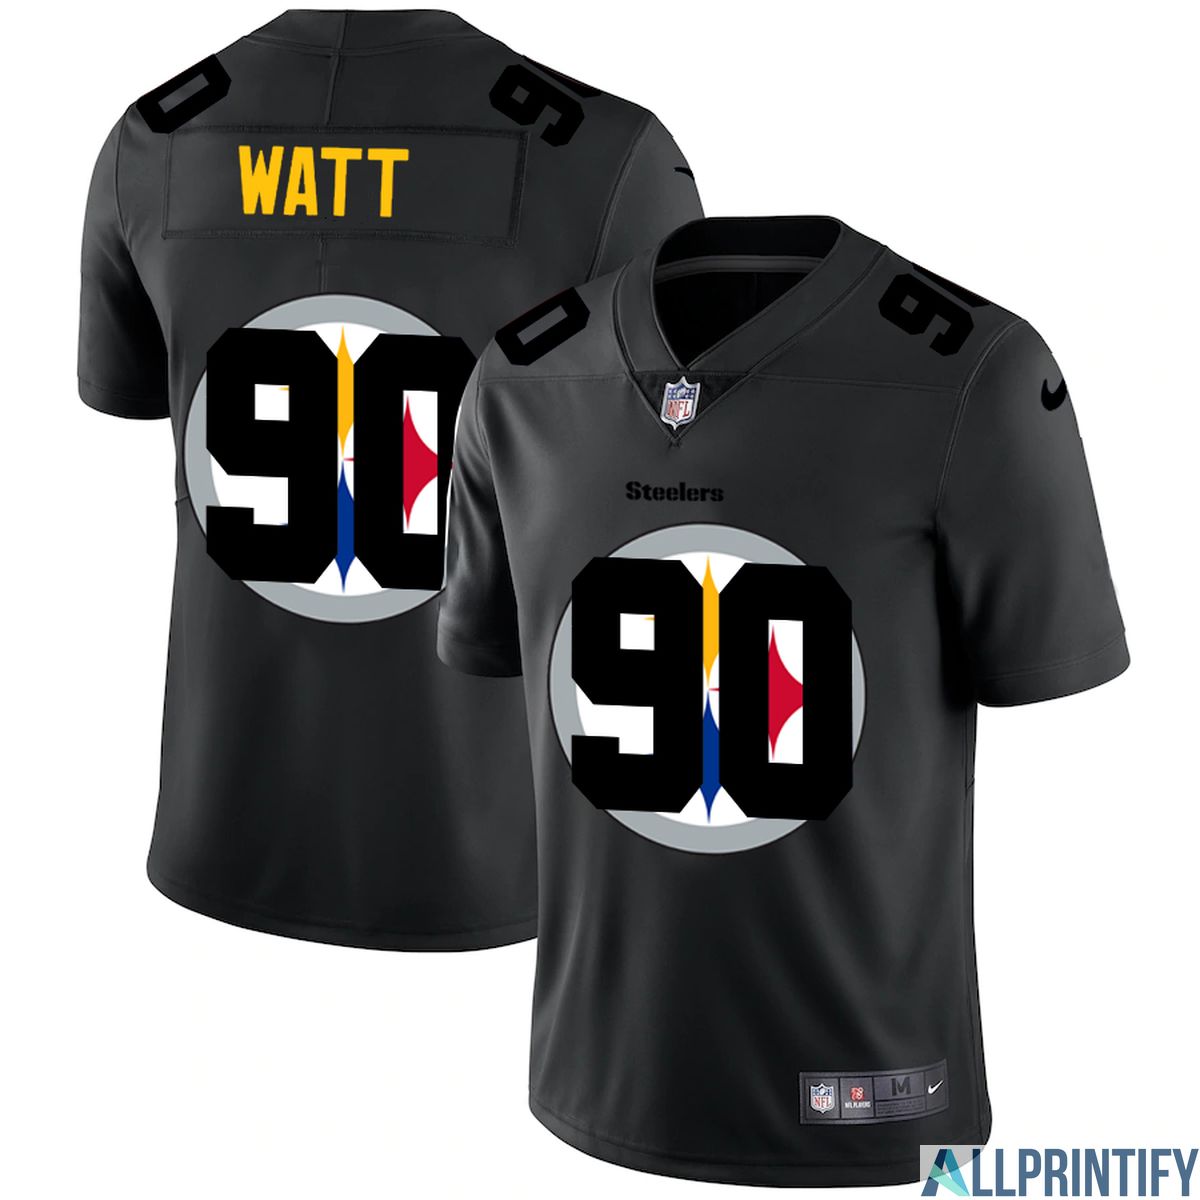 Trent Jordan Watt Pittsburgh Steelers 90 Limited Player Jersey Black